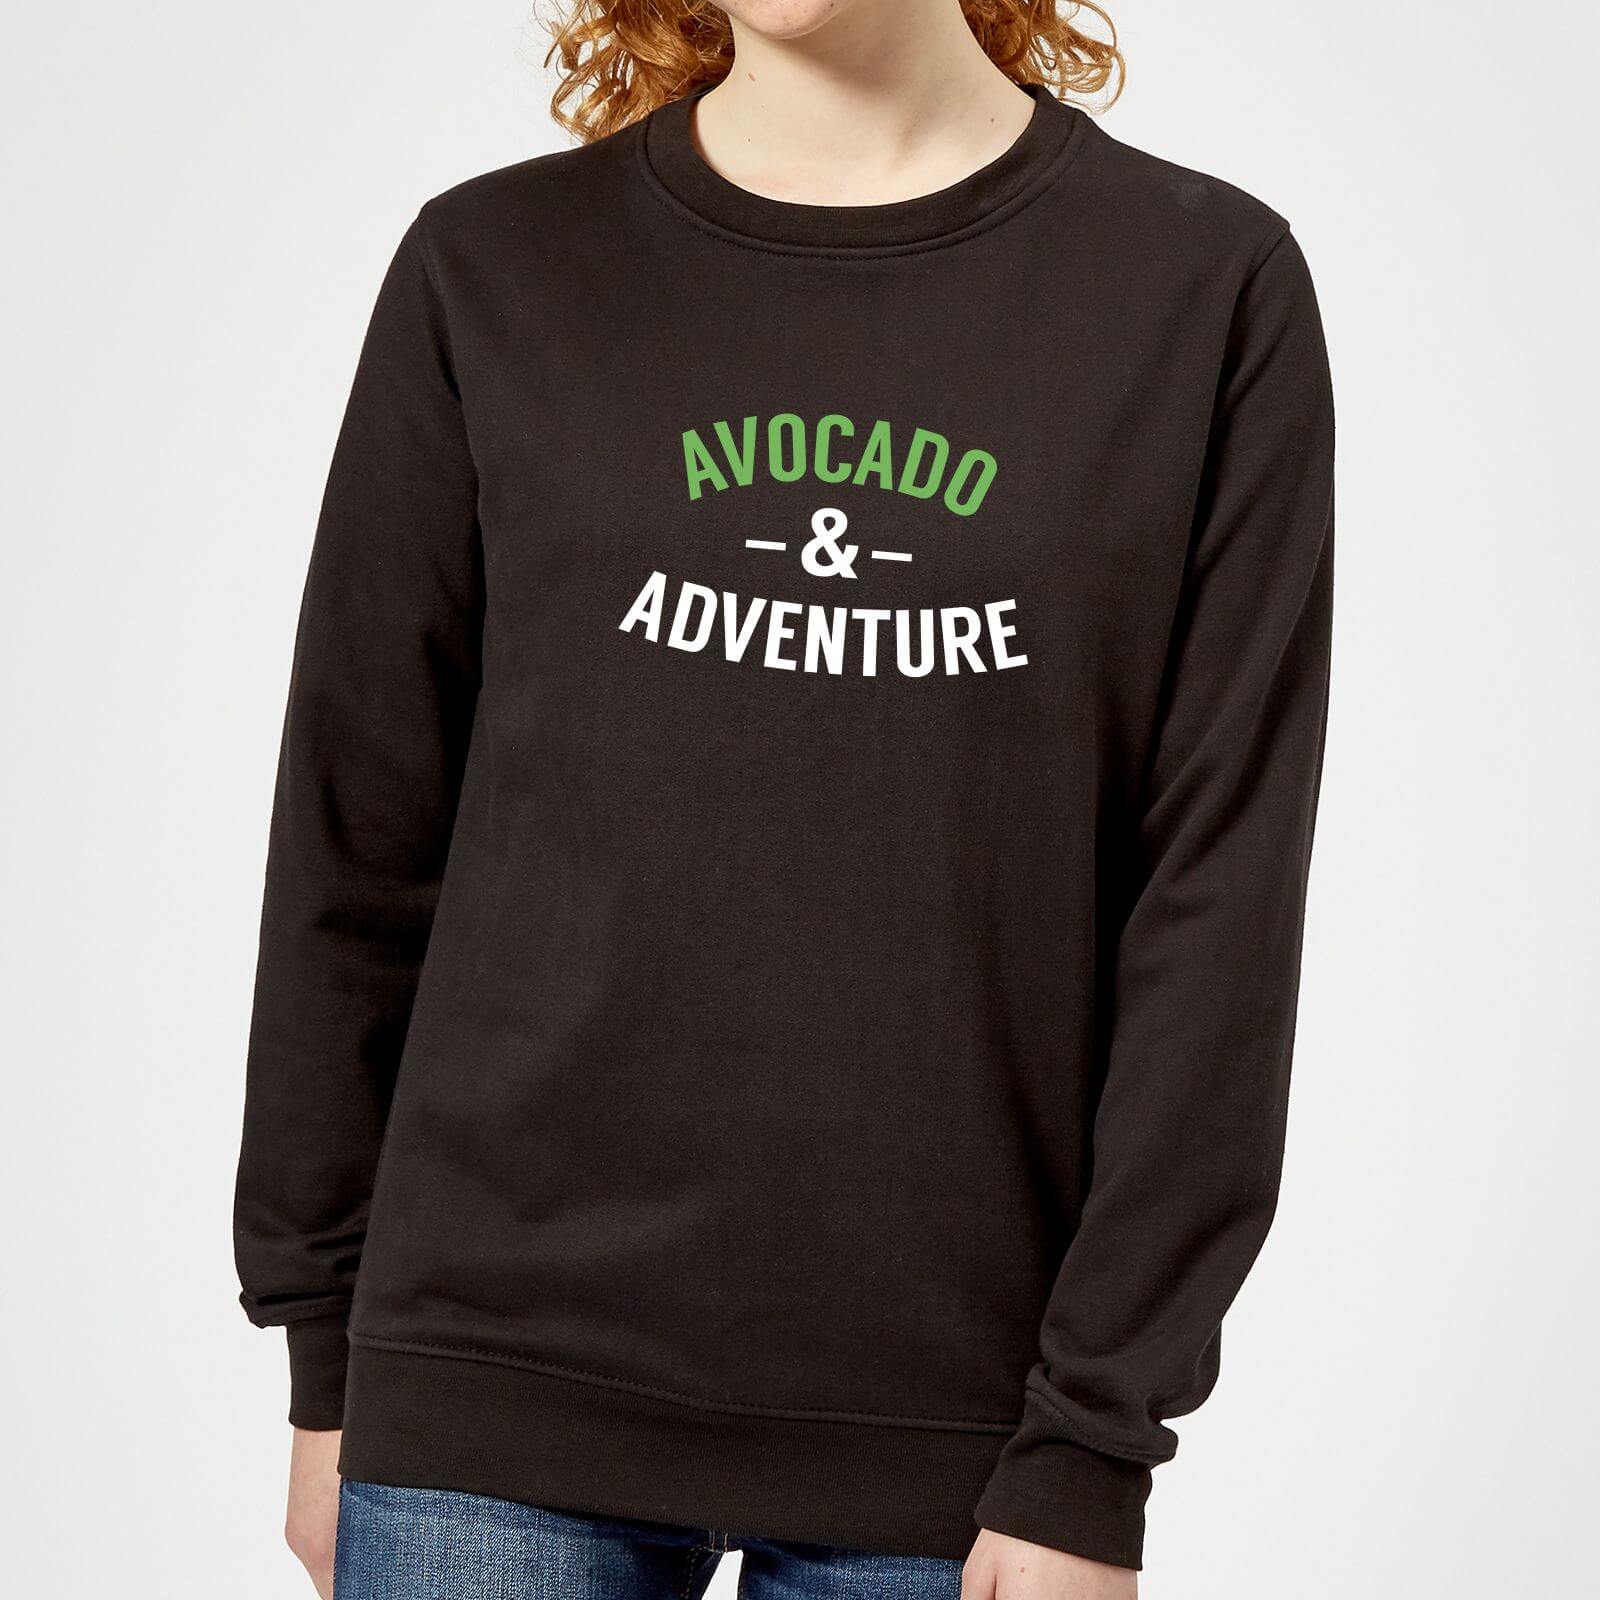 Avocado and Adventure Women's Sweatshirt - Black - 5XL - Black